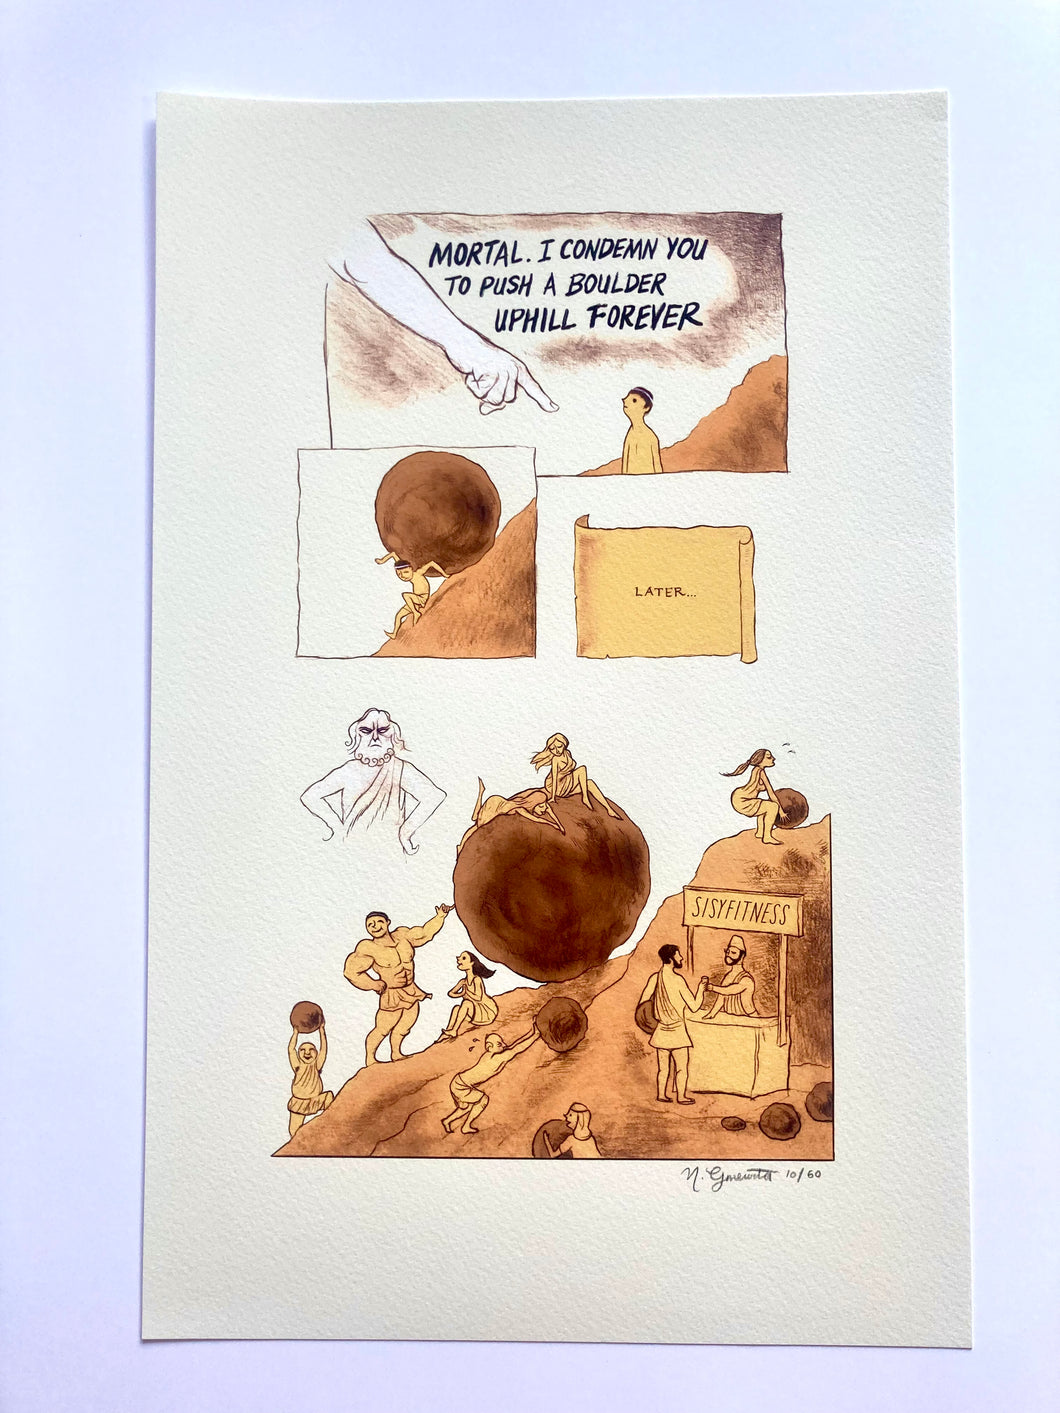 “Sisyphus Myth” Limited Edition Print